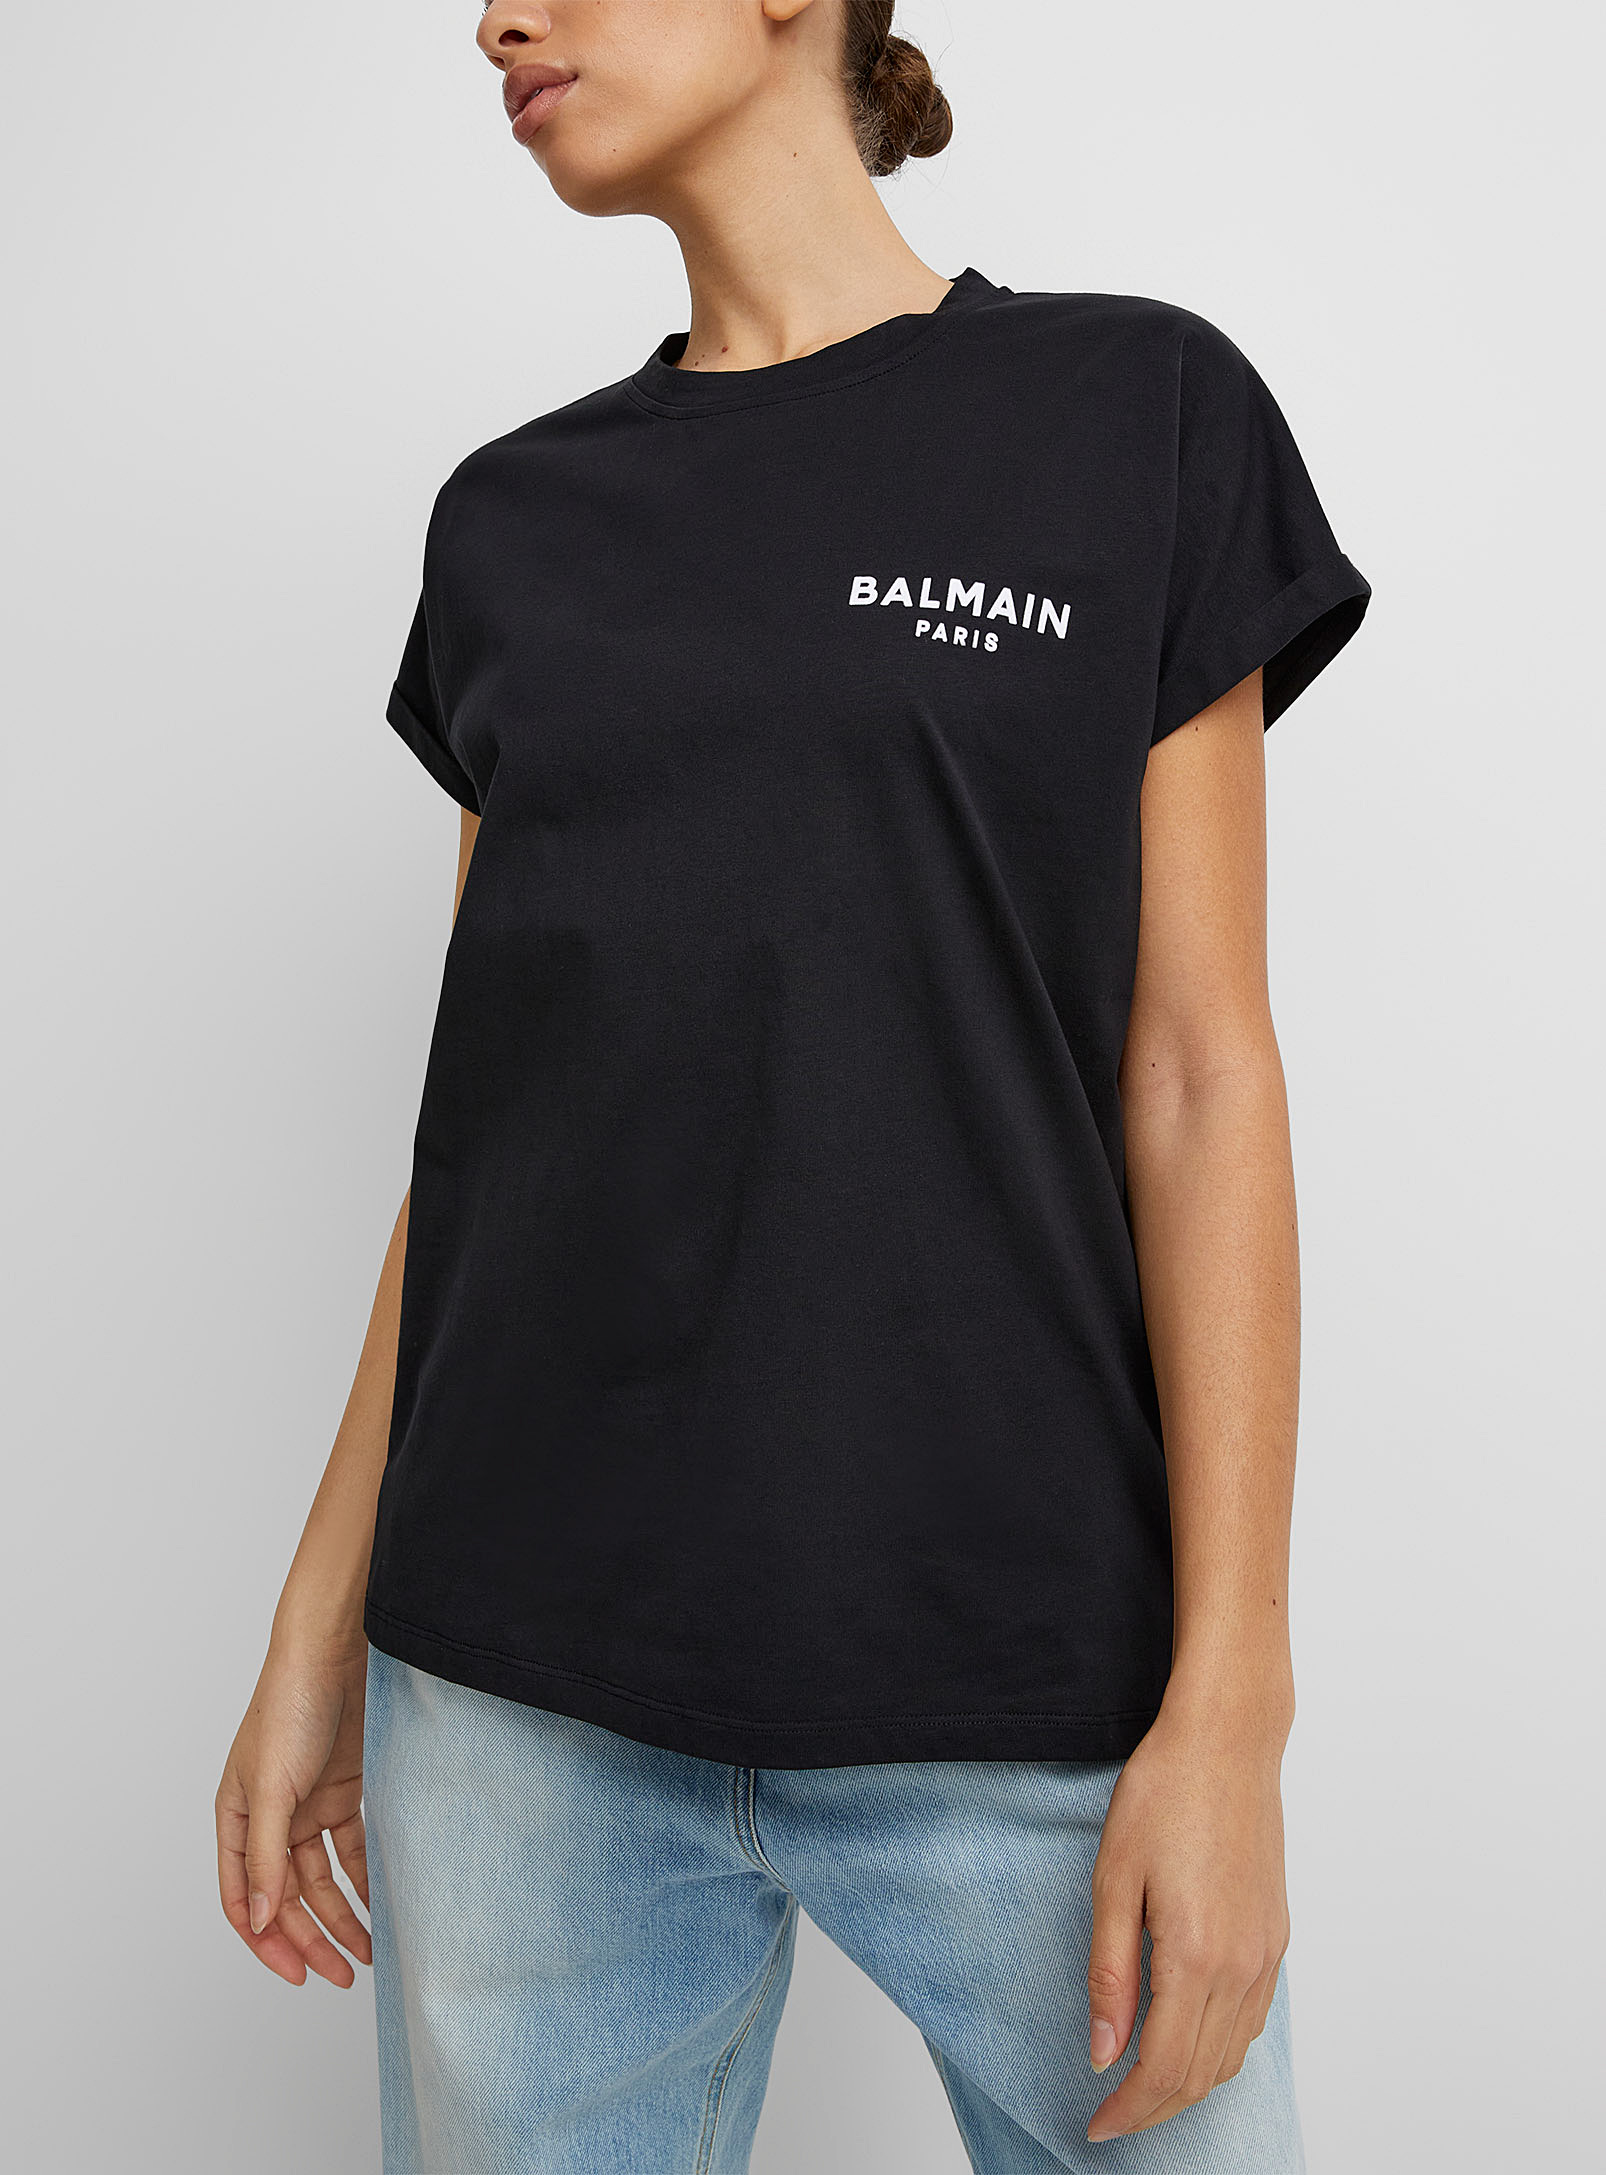 Balmain - Women's Signature T-shirt